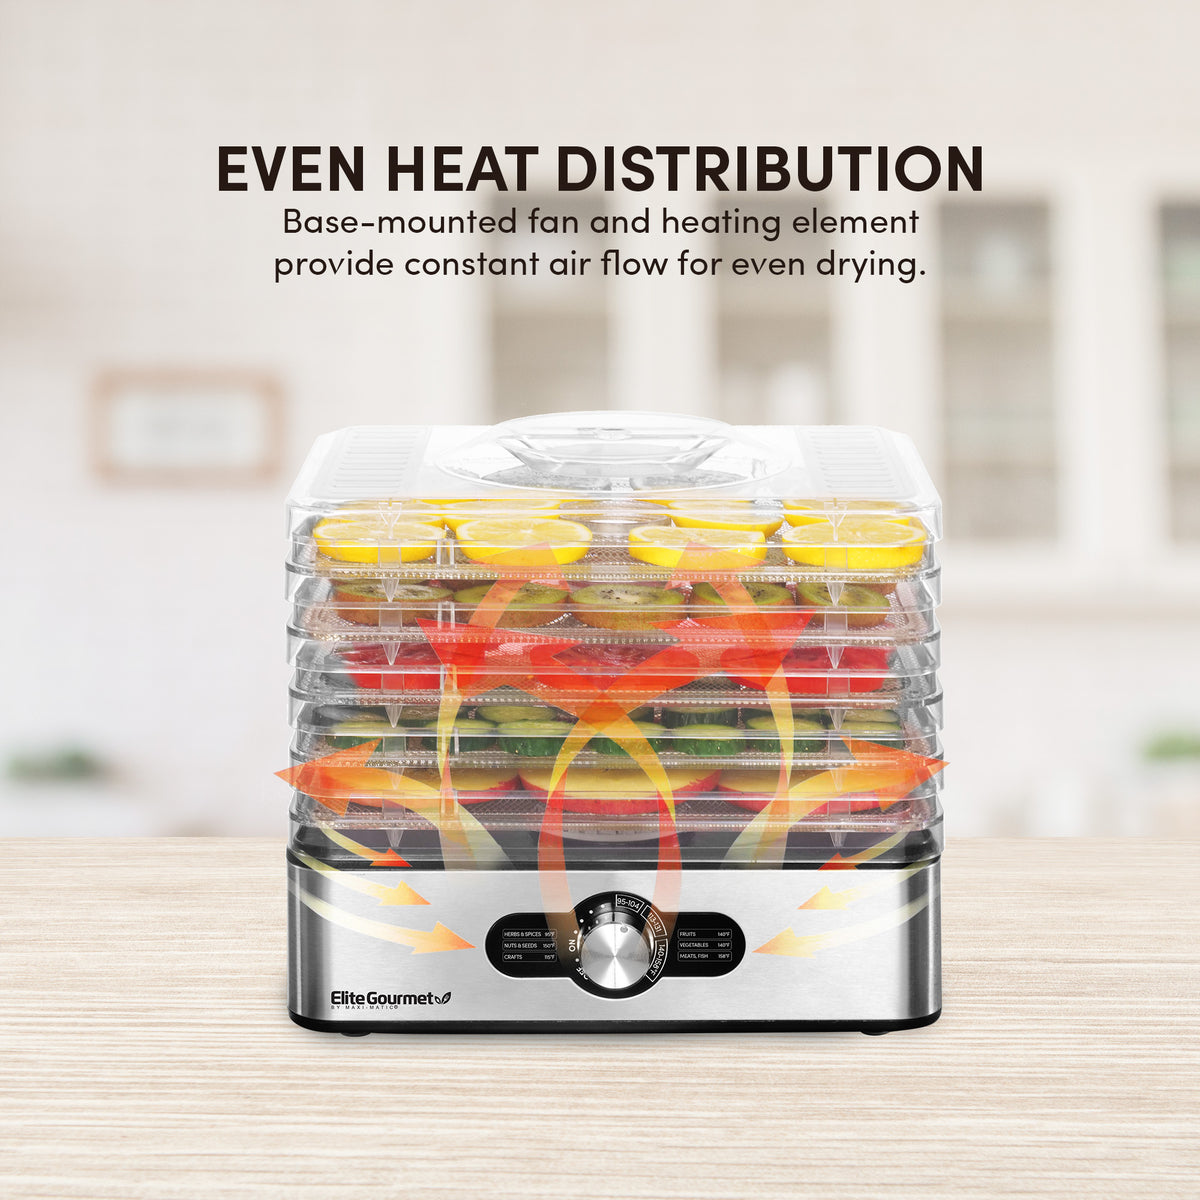 5-Stainless Steel Embedded Food Dehydrator – Shop Gourmet Kitchen Appliances